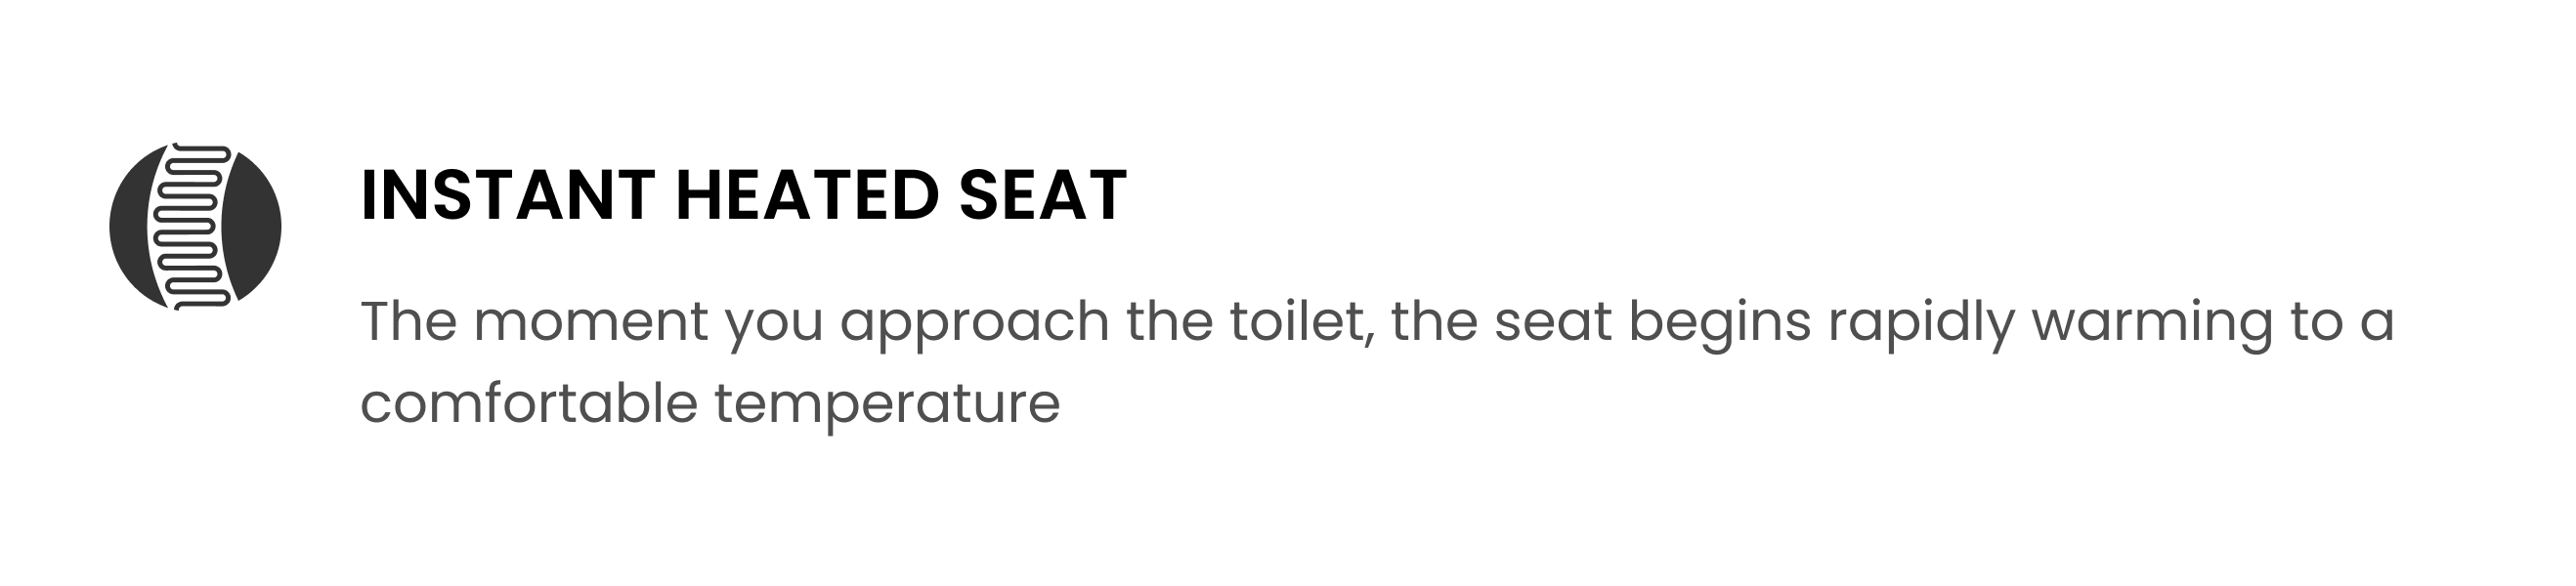 heatedseat One Piece Toilet (NEOREST XH I)